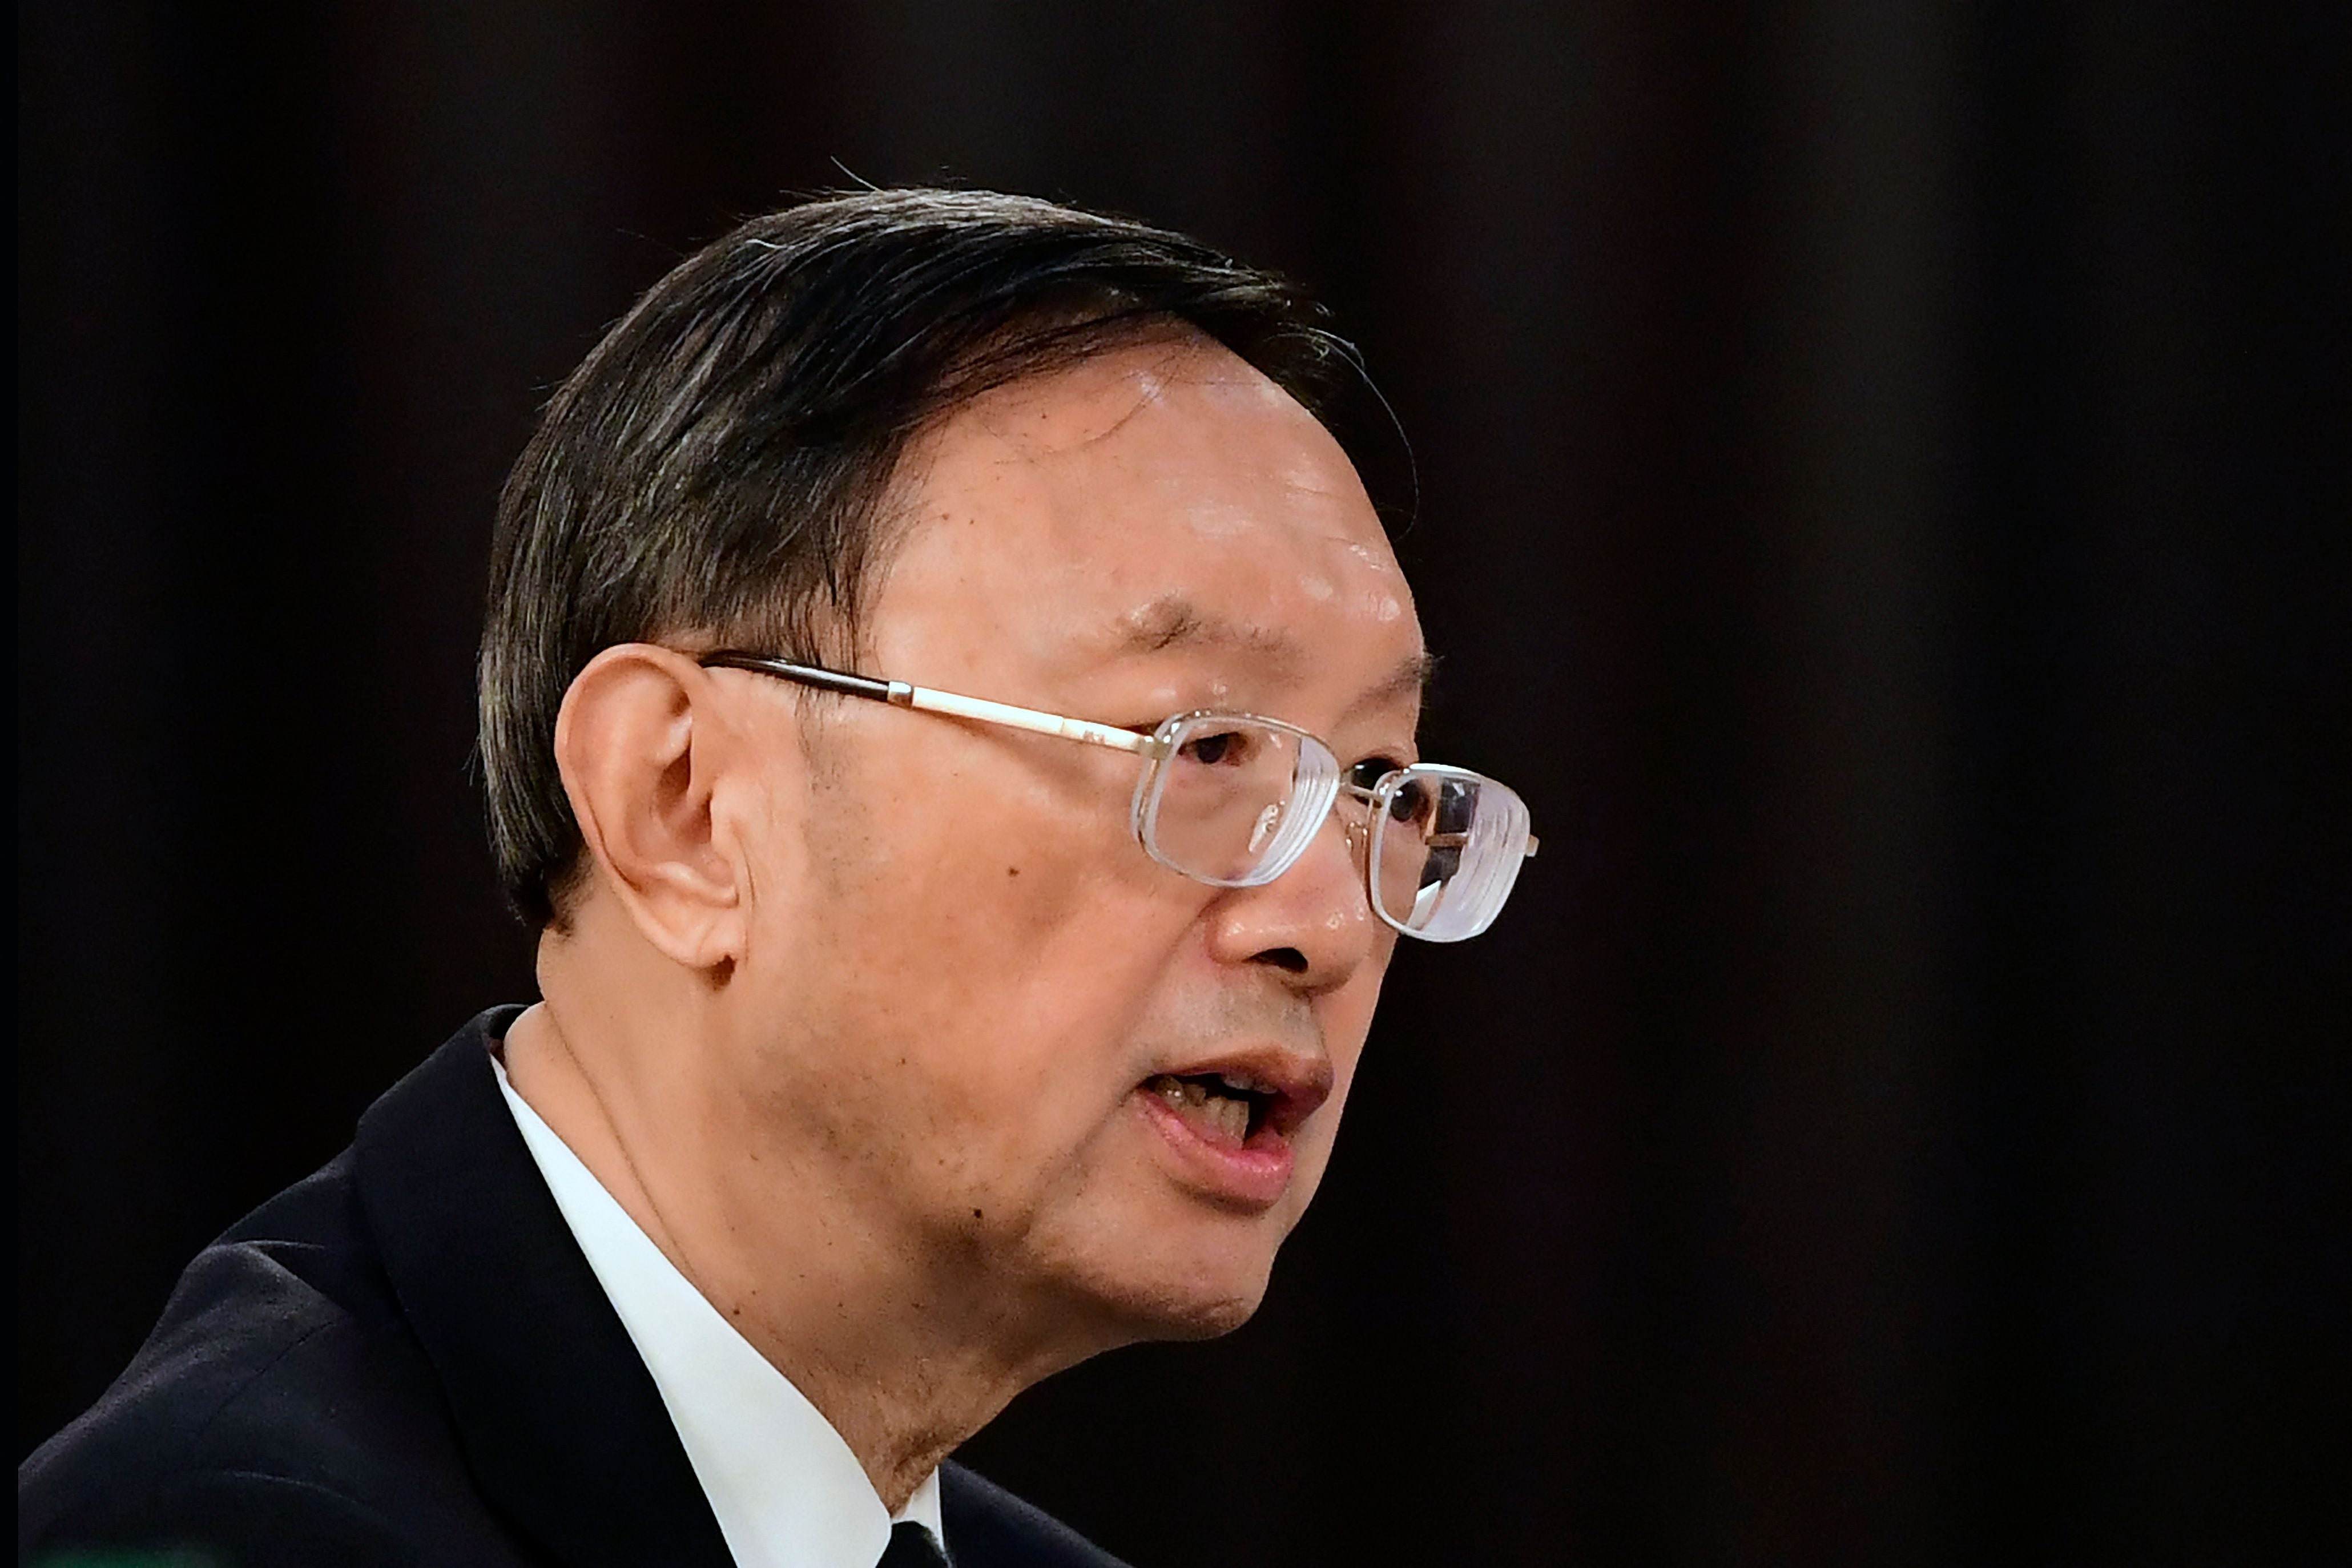 Yang Jiechi described the attitude of US officials as ‘condescending’